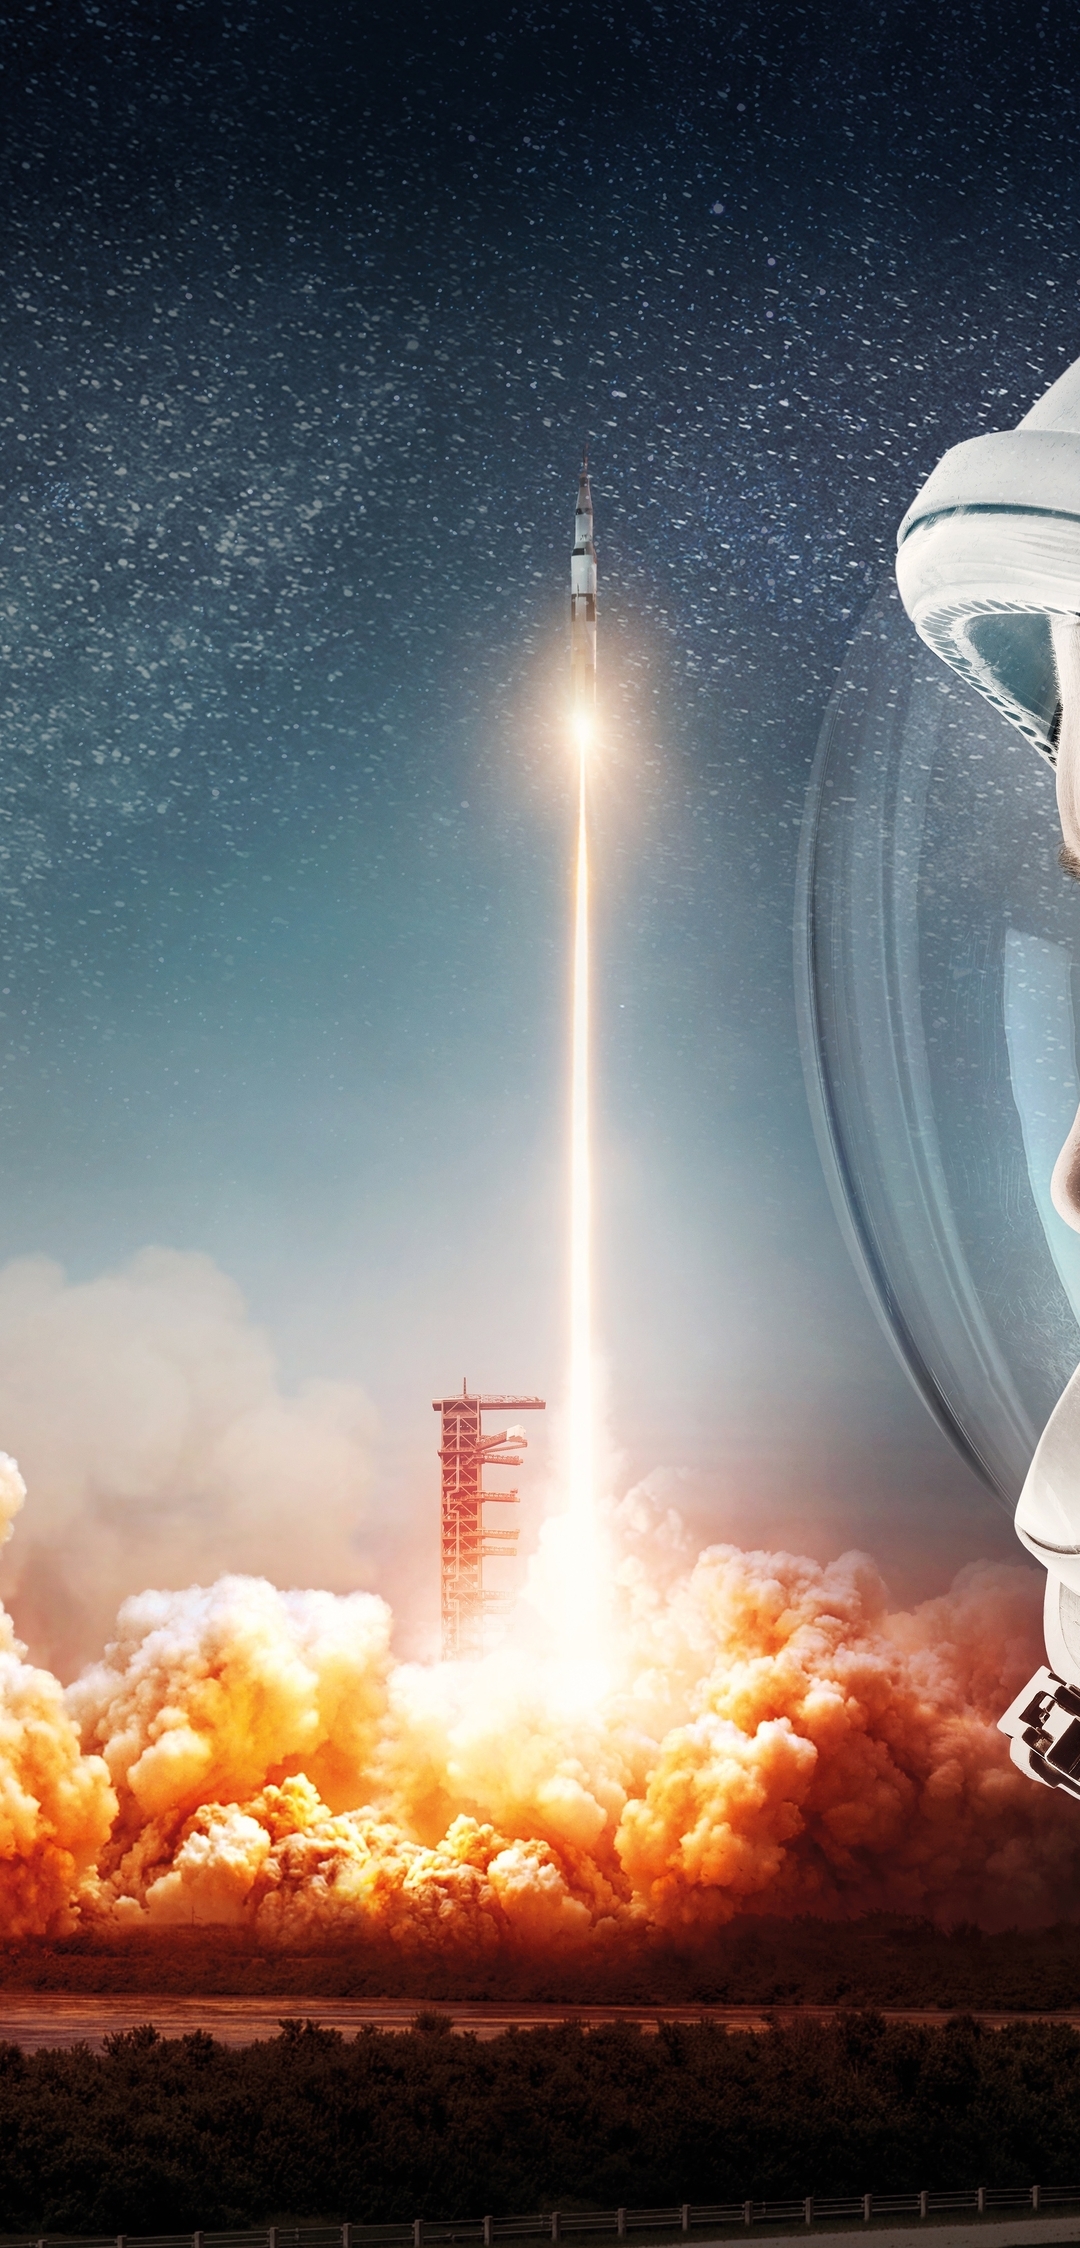 Картинка: Мужчина, космонавт, скафандр, ракета, взлёт, небо, звёзды